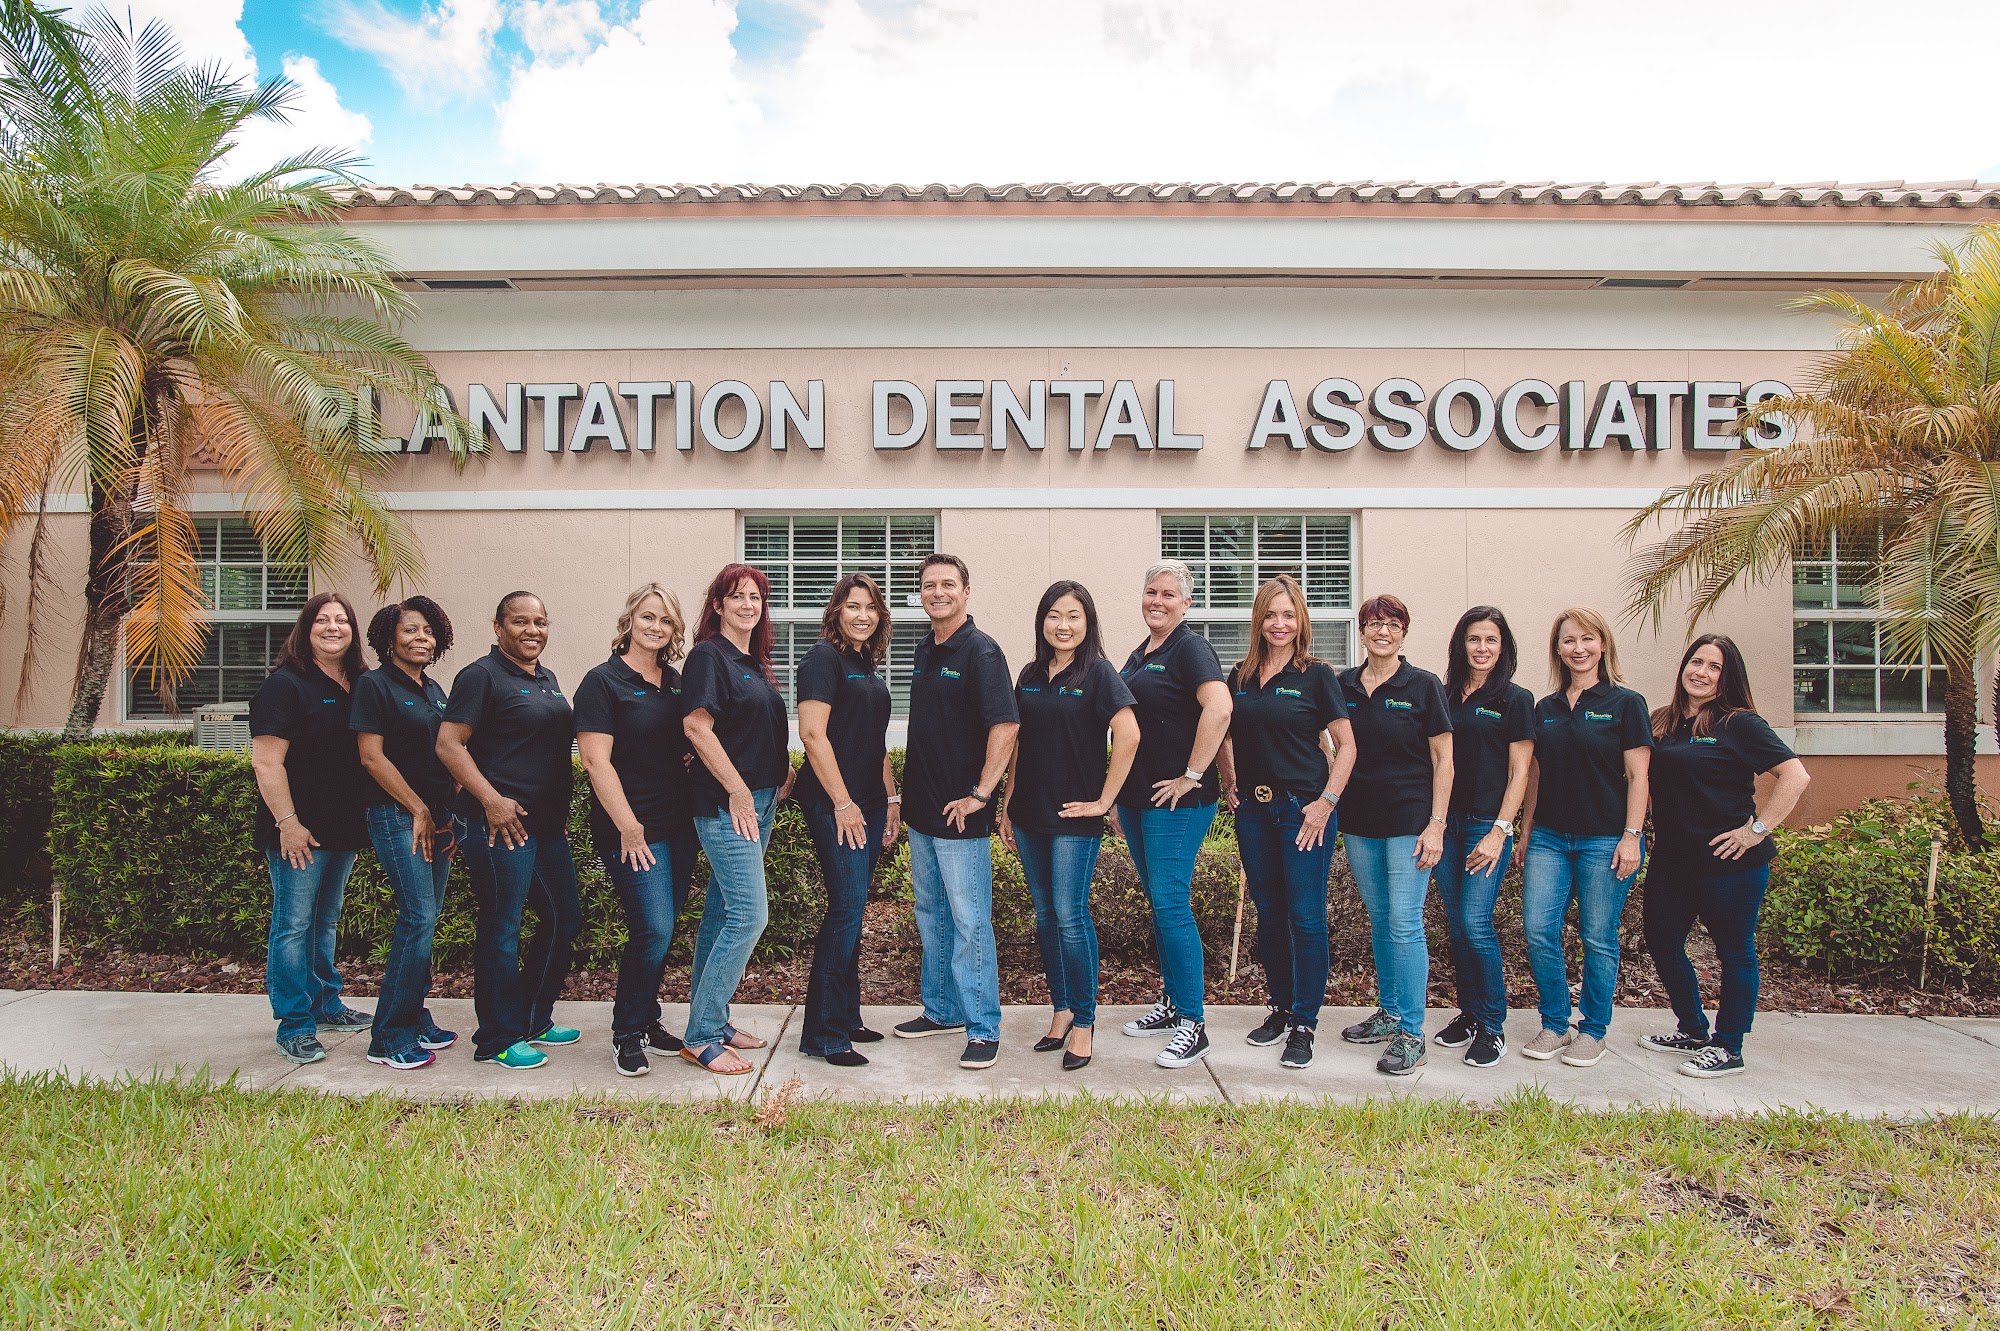 Plantation Dental Associates